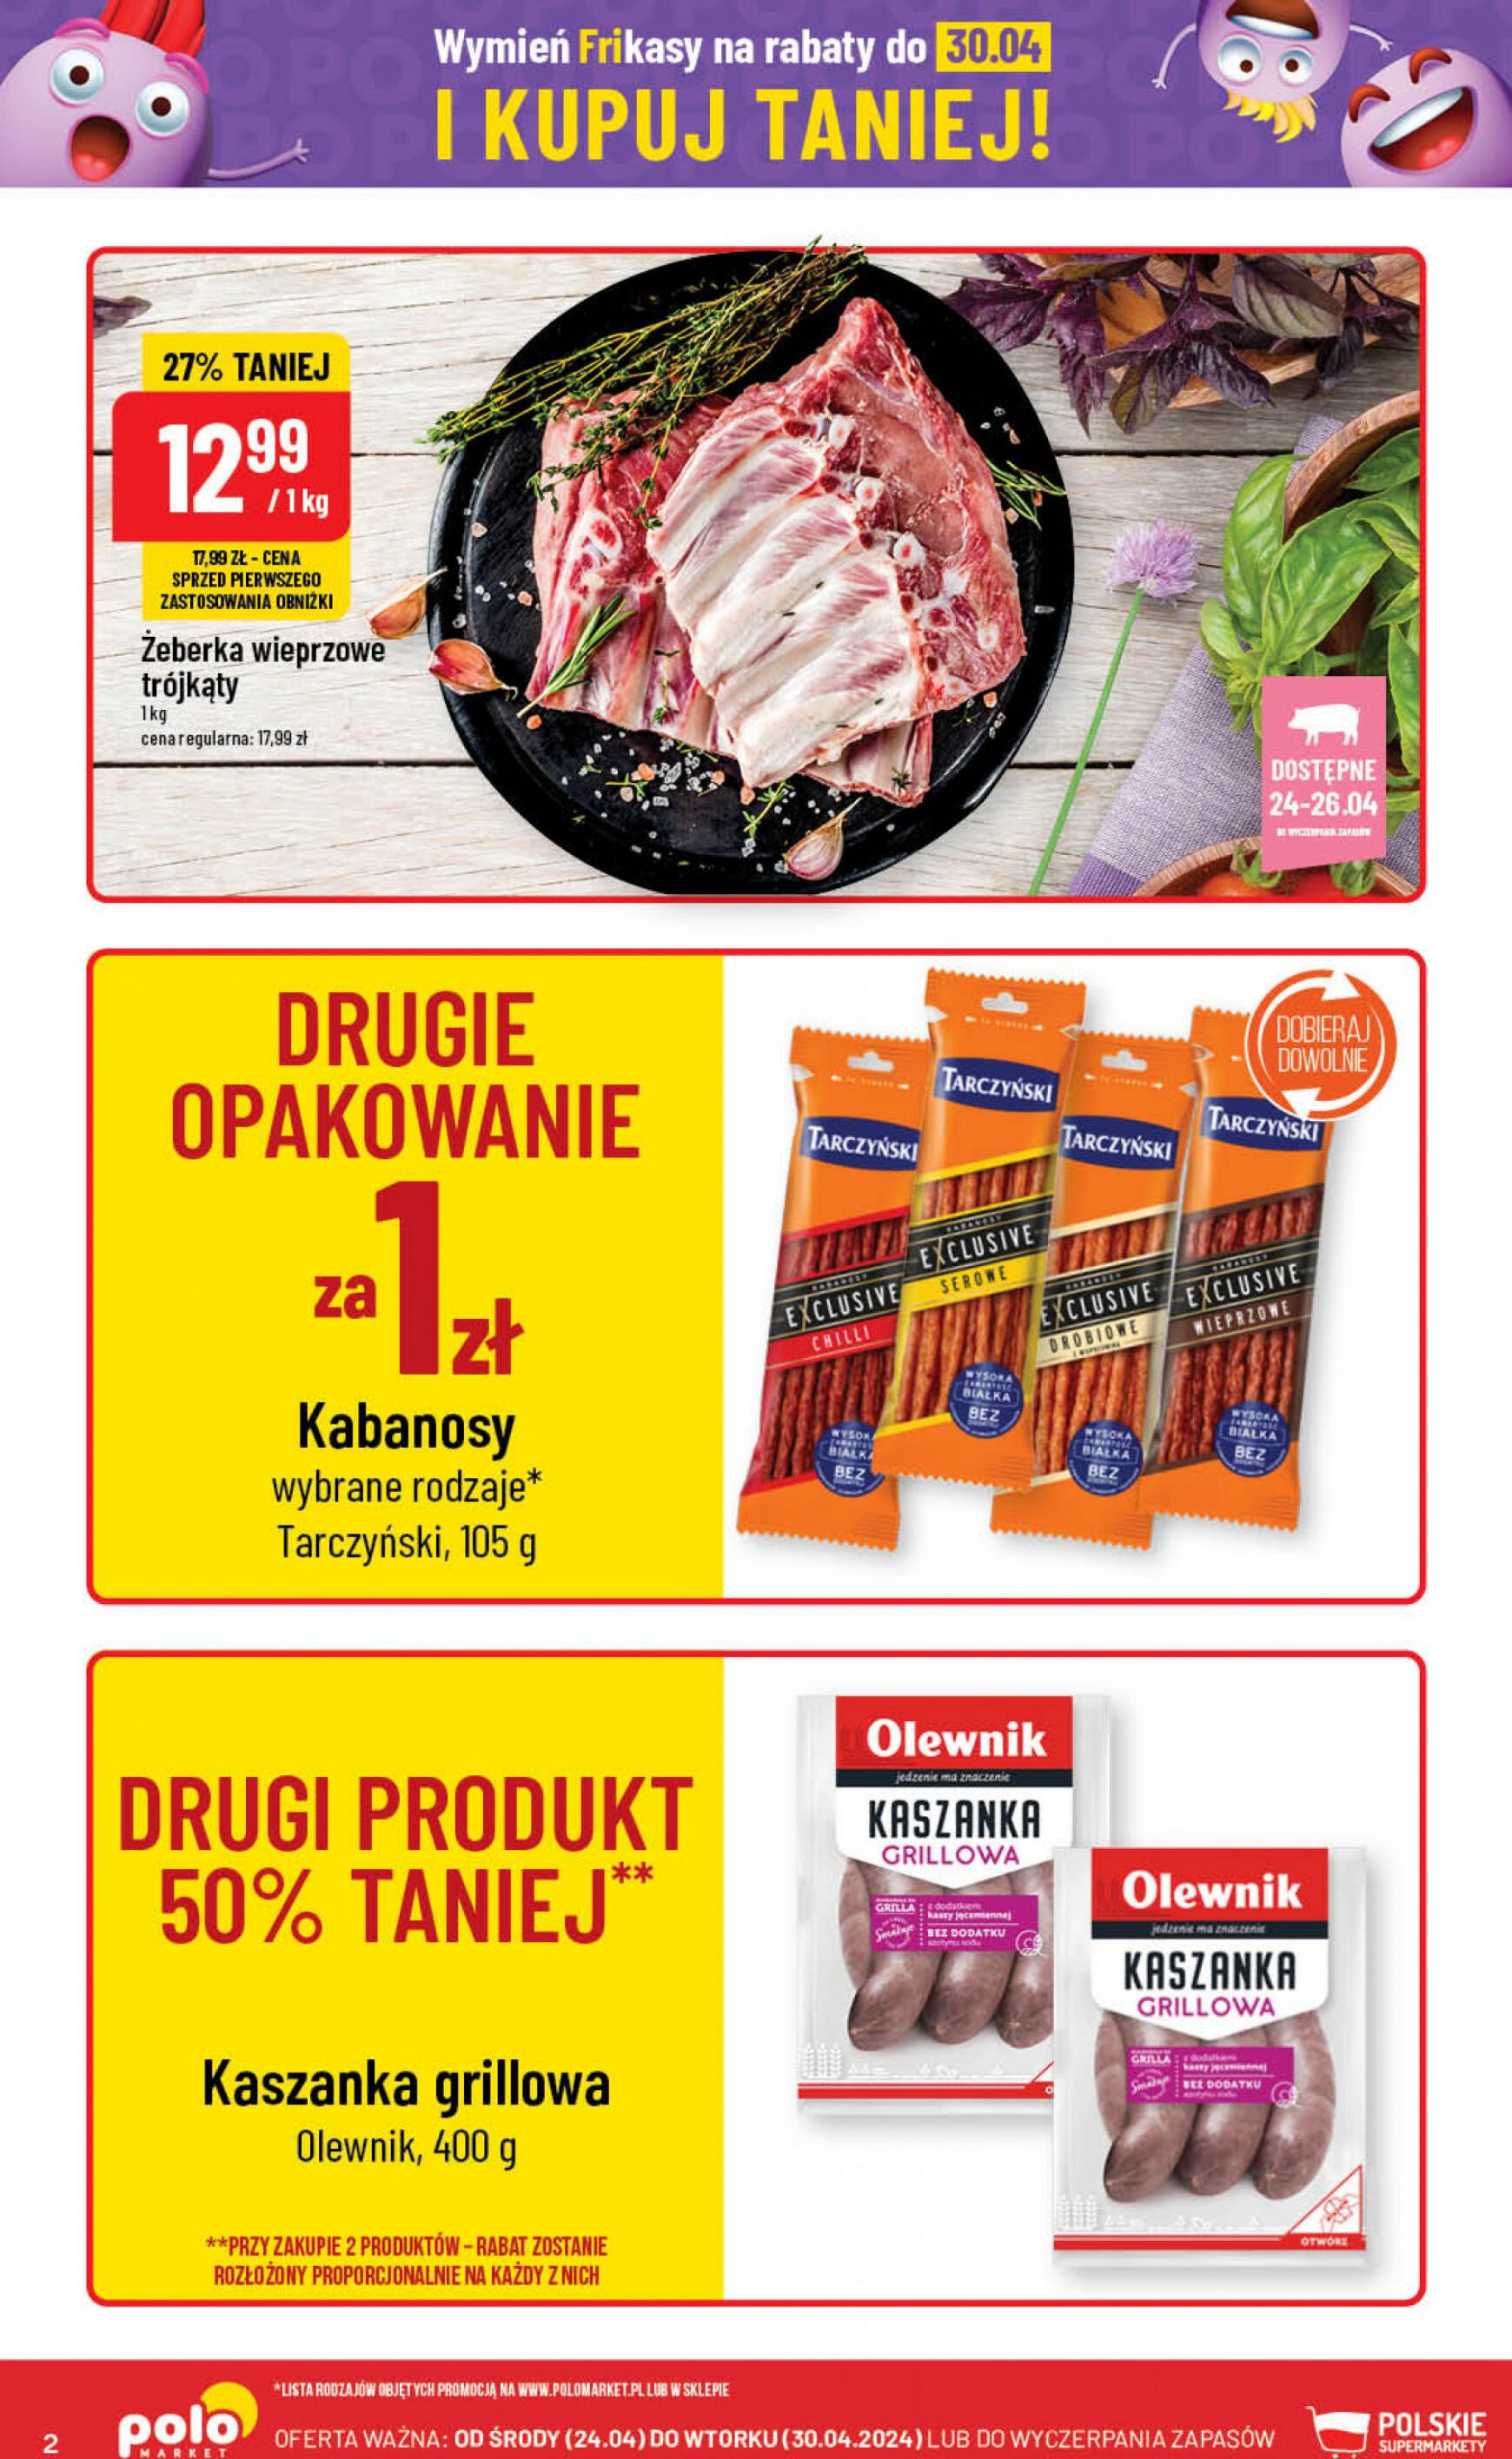 polomarket - POLO market gazetka aktualna ważna od 23.04. - 30.04. - page: 2